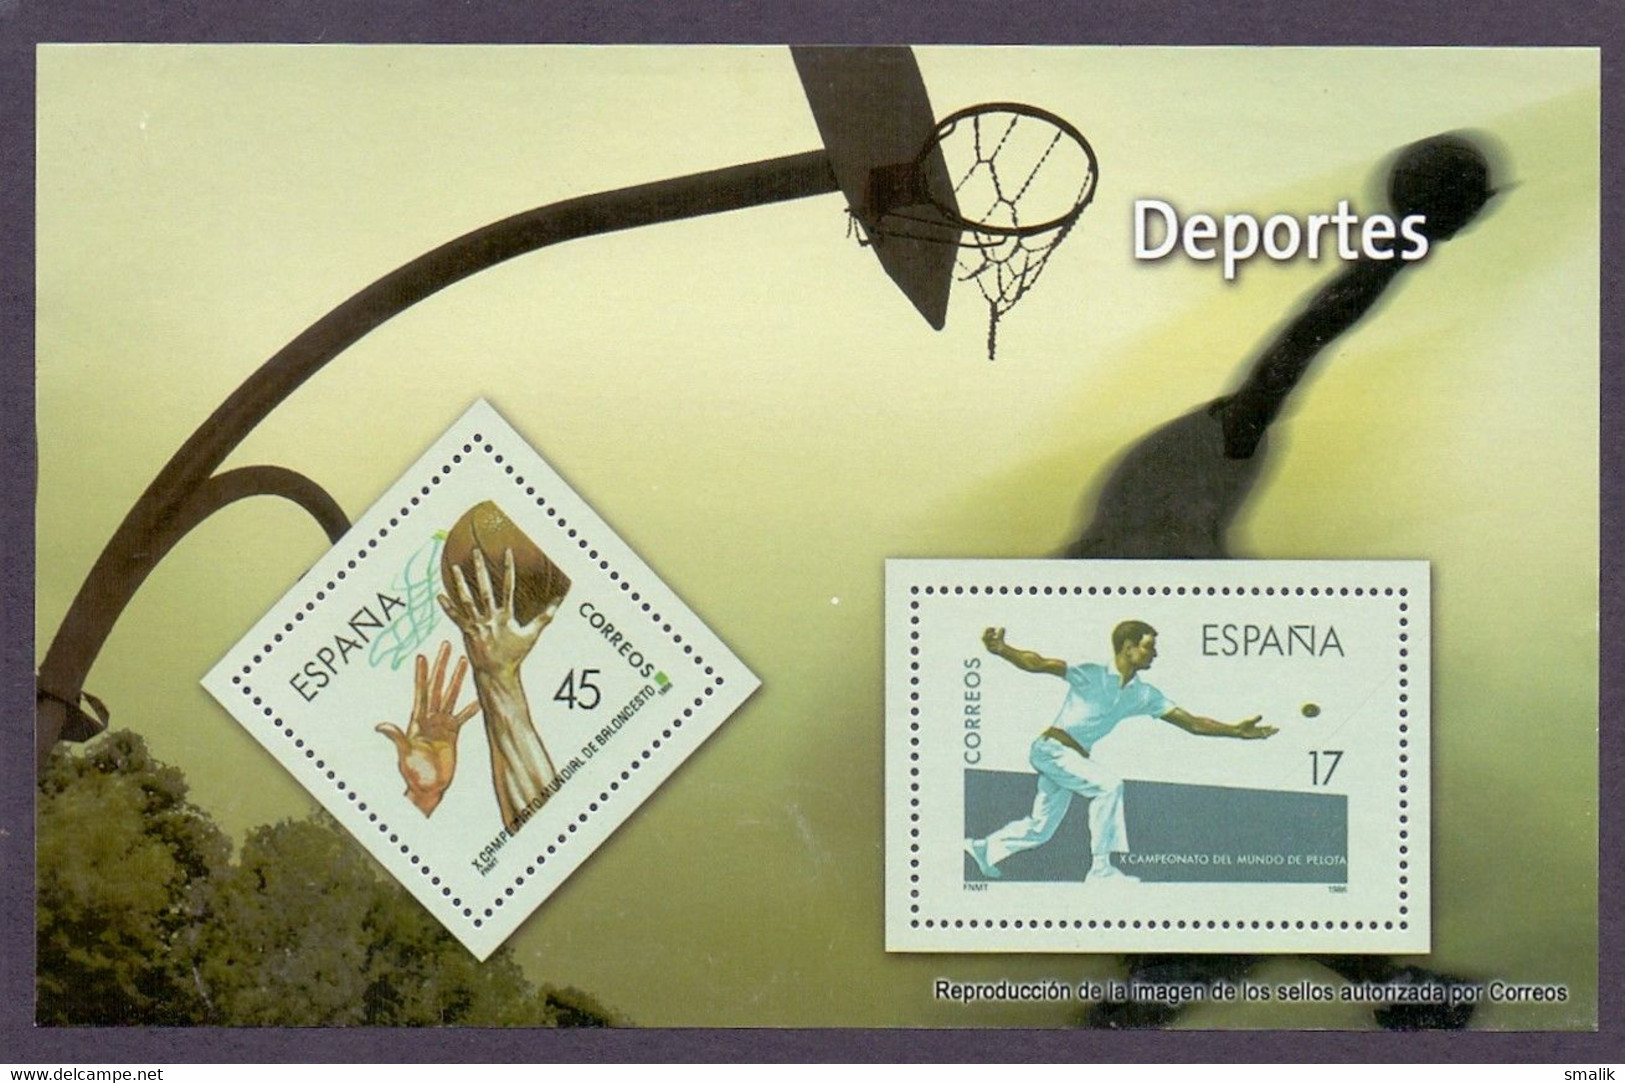 SPAIN 1986 - Deportes Sports, Miniature Sheet MNH - Blocs & Hojas